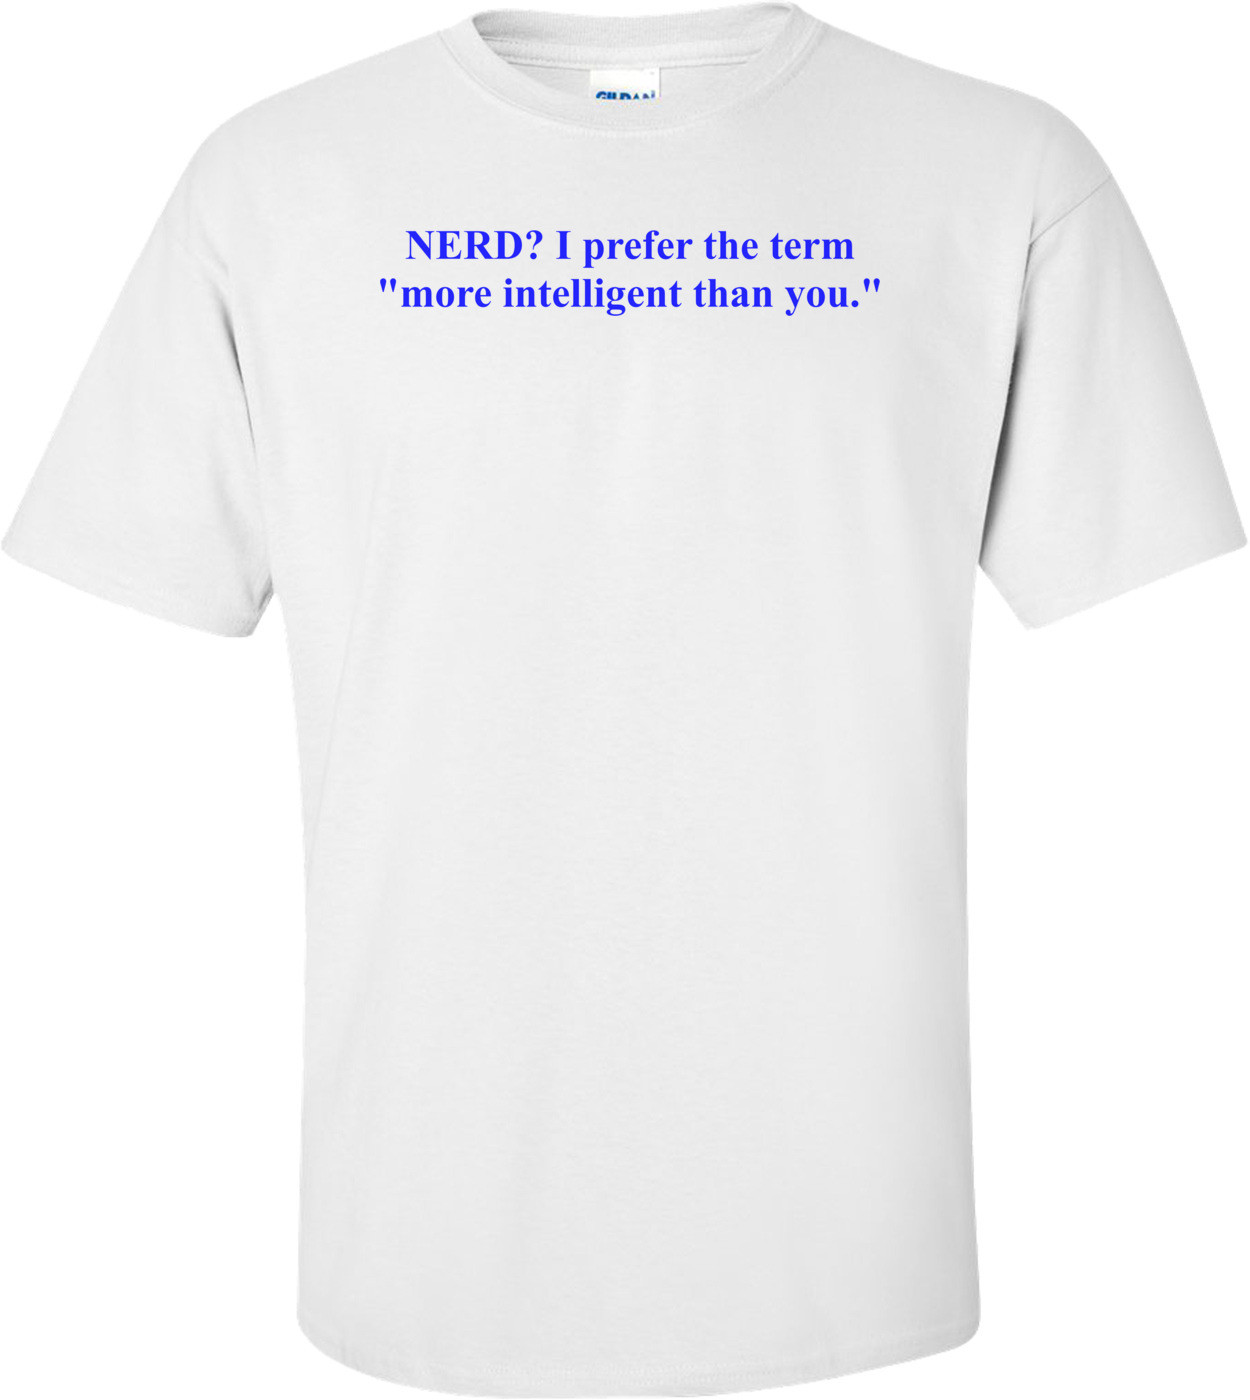 NERD? I prefer the term "more intelligent than you." Shirt